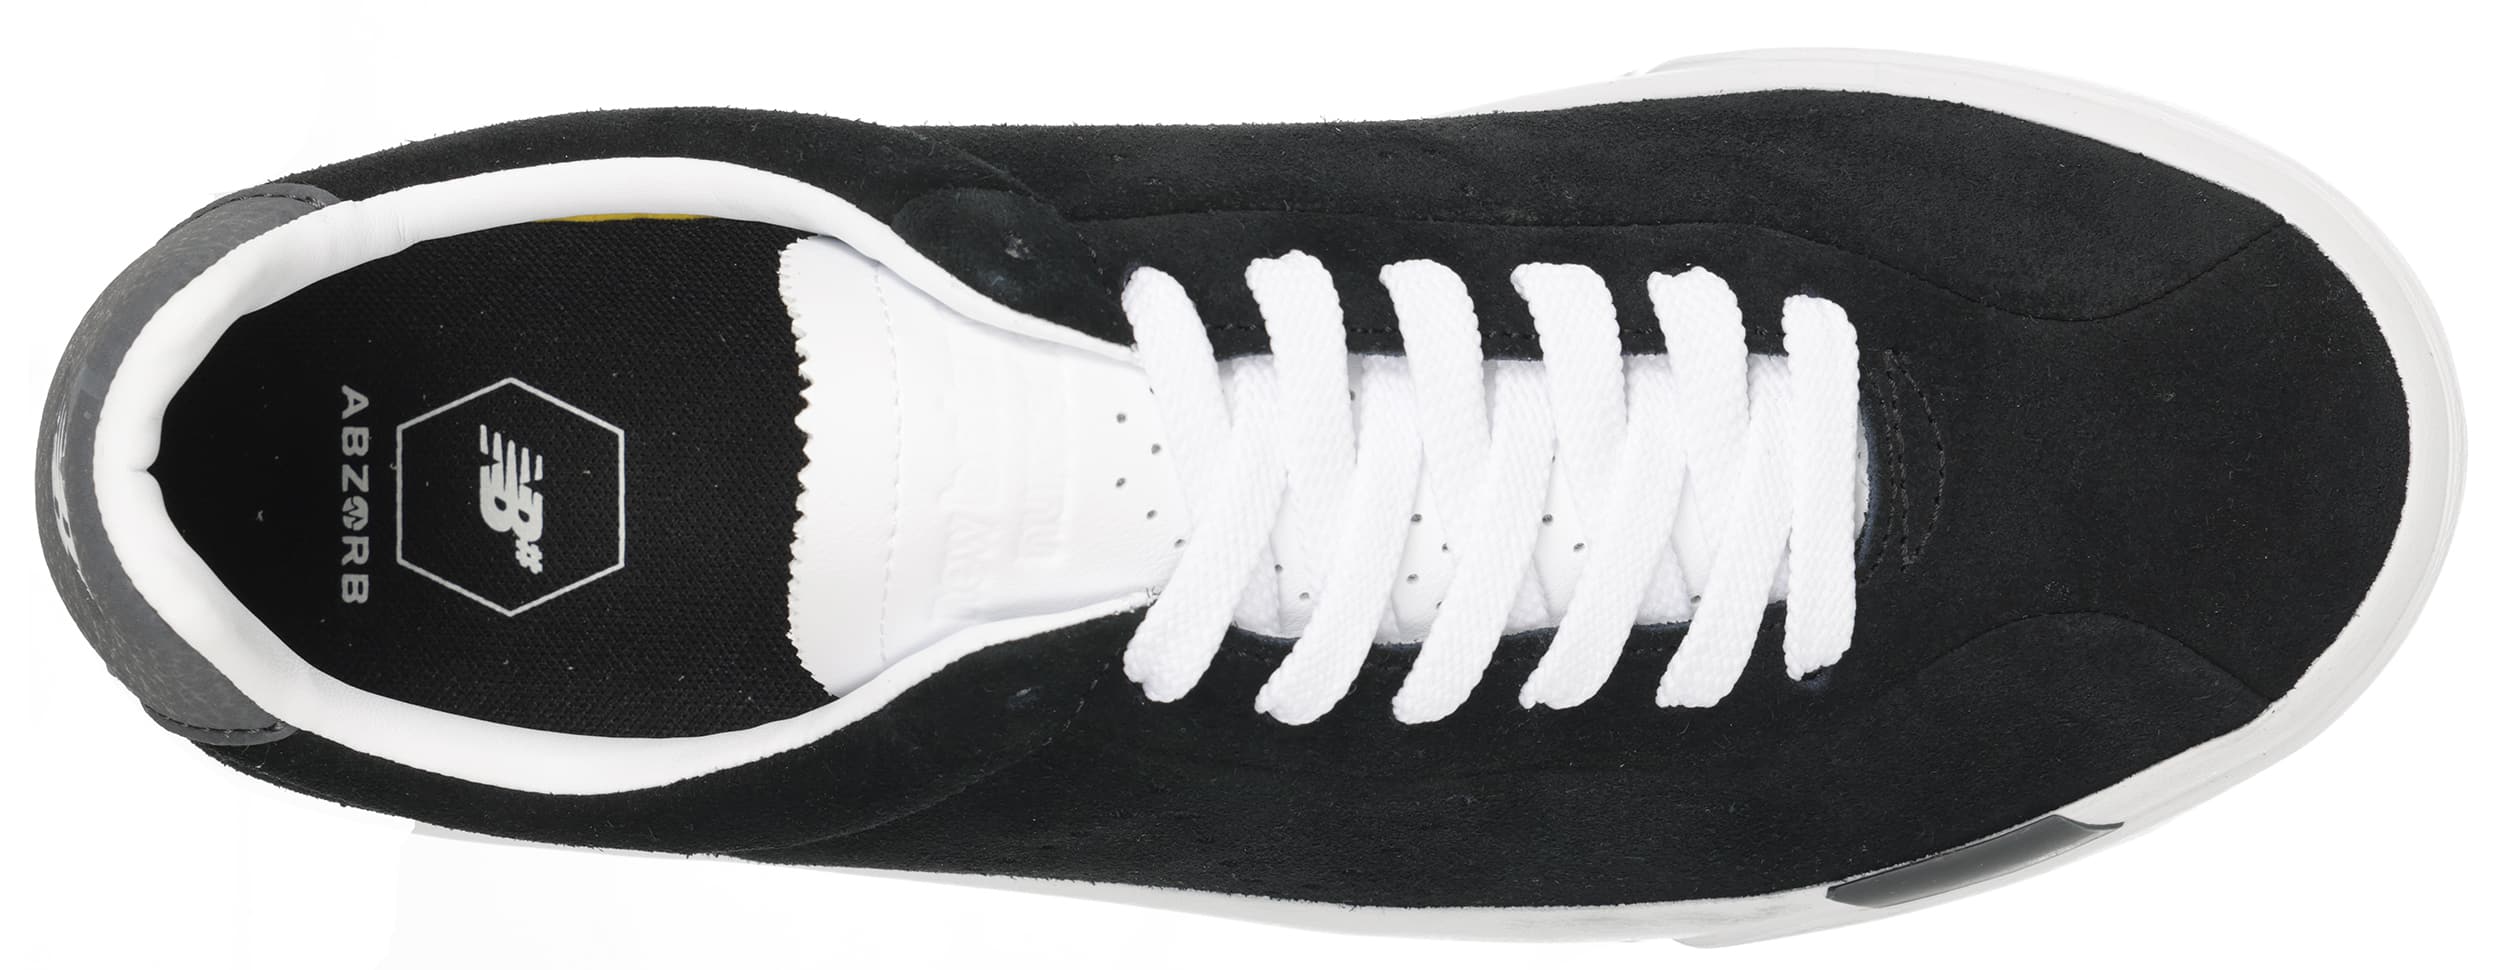 New Balance Numeric 22 Skate Shoes - black/white | Tactics